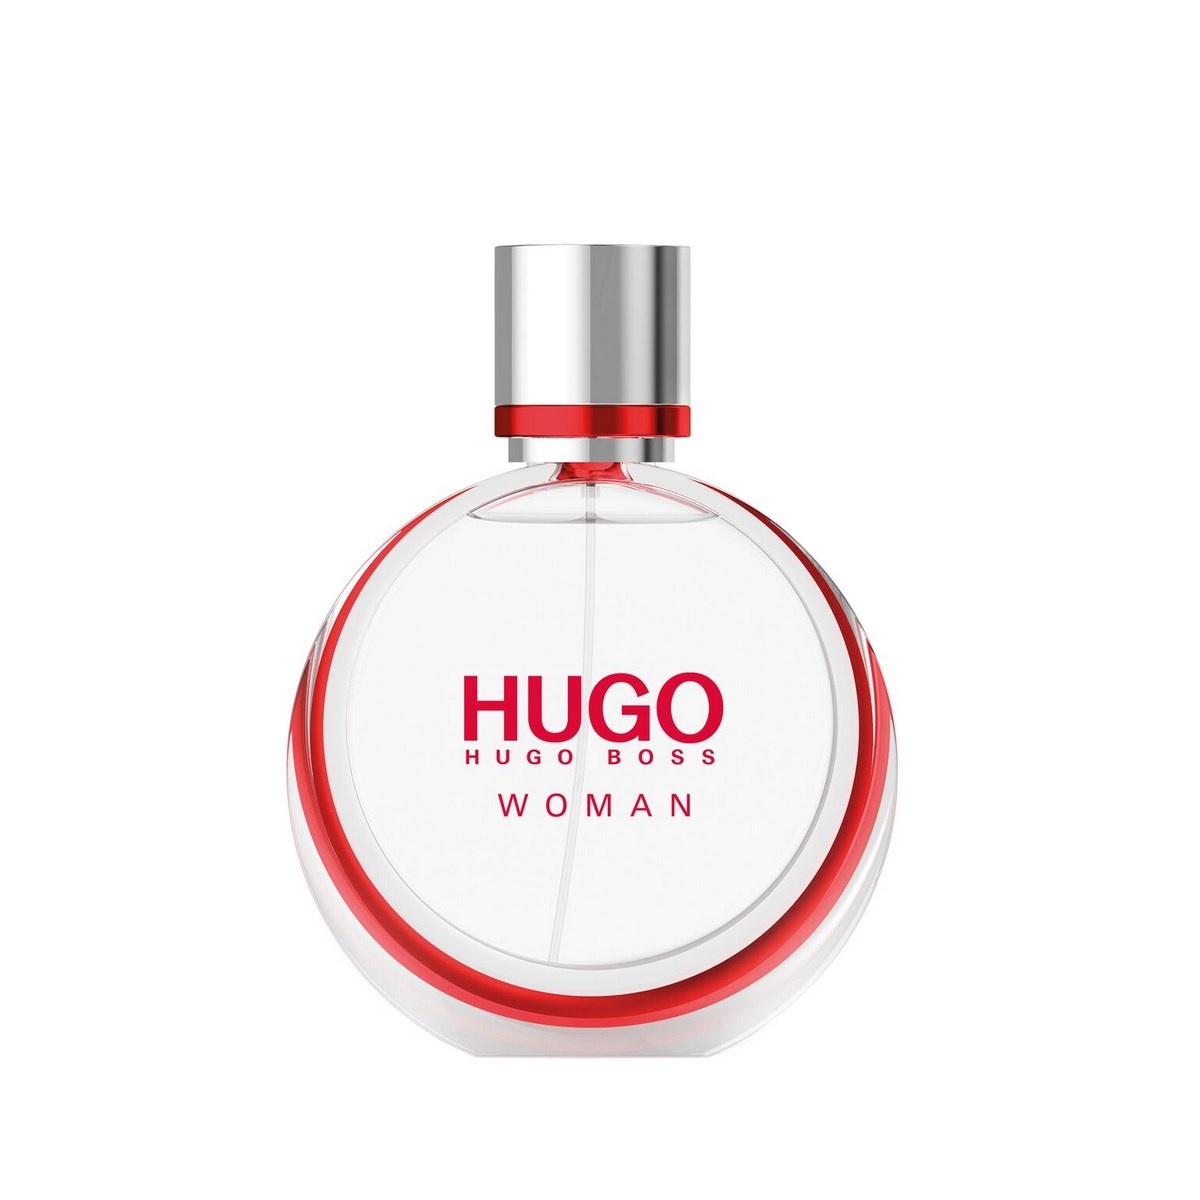  HUGO Woman Eau de Parfum